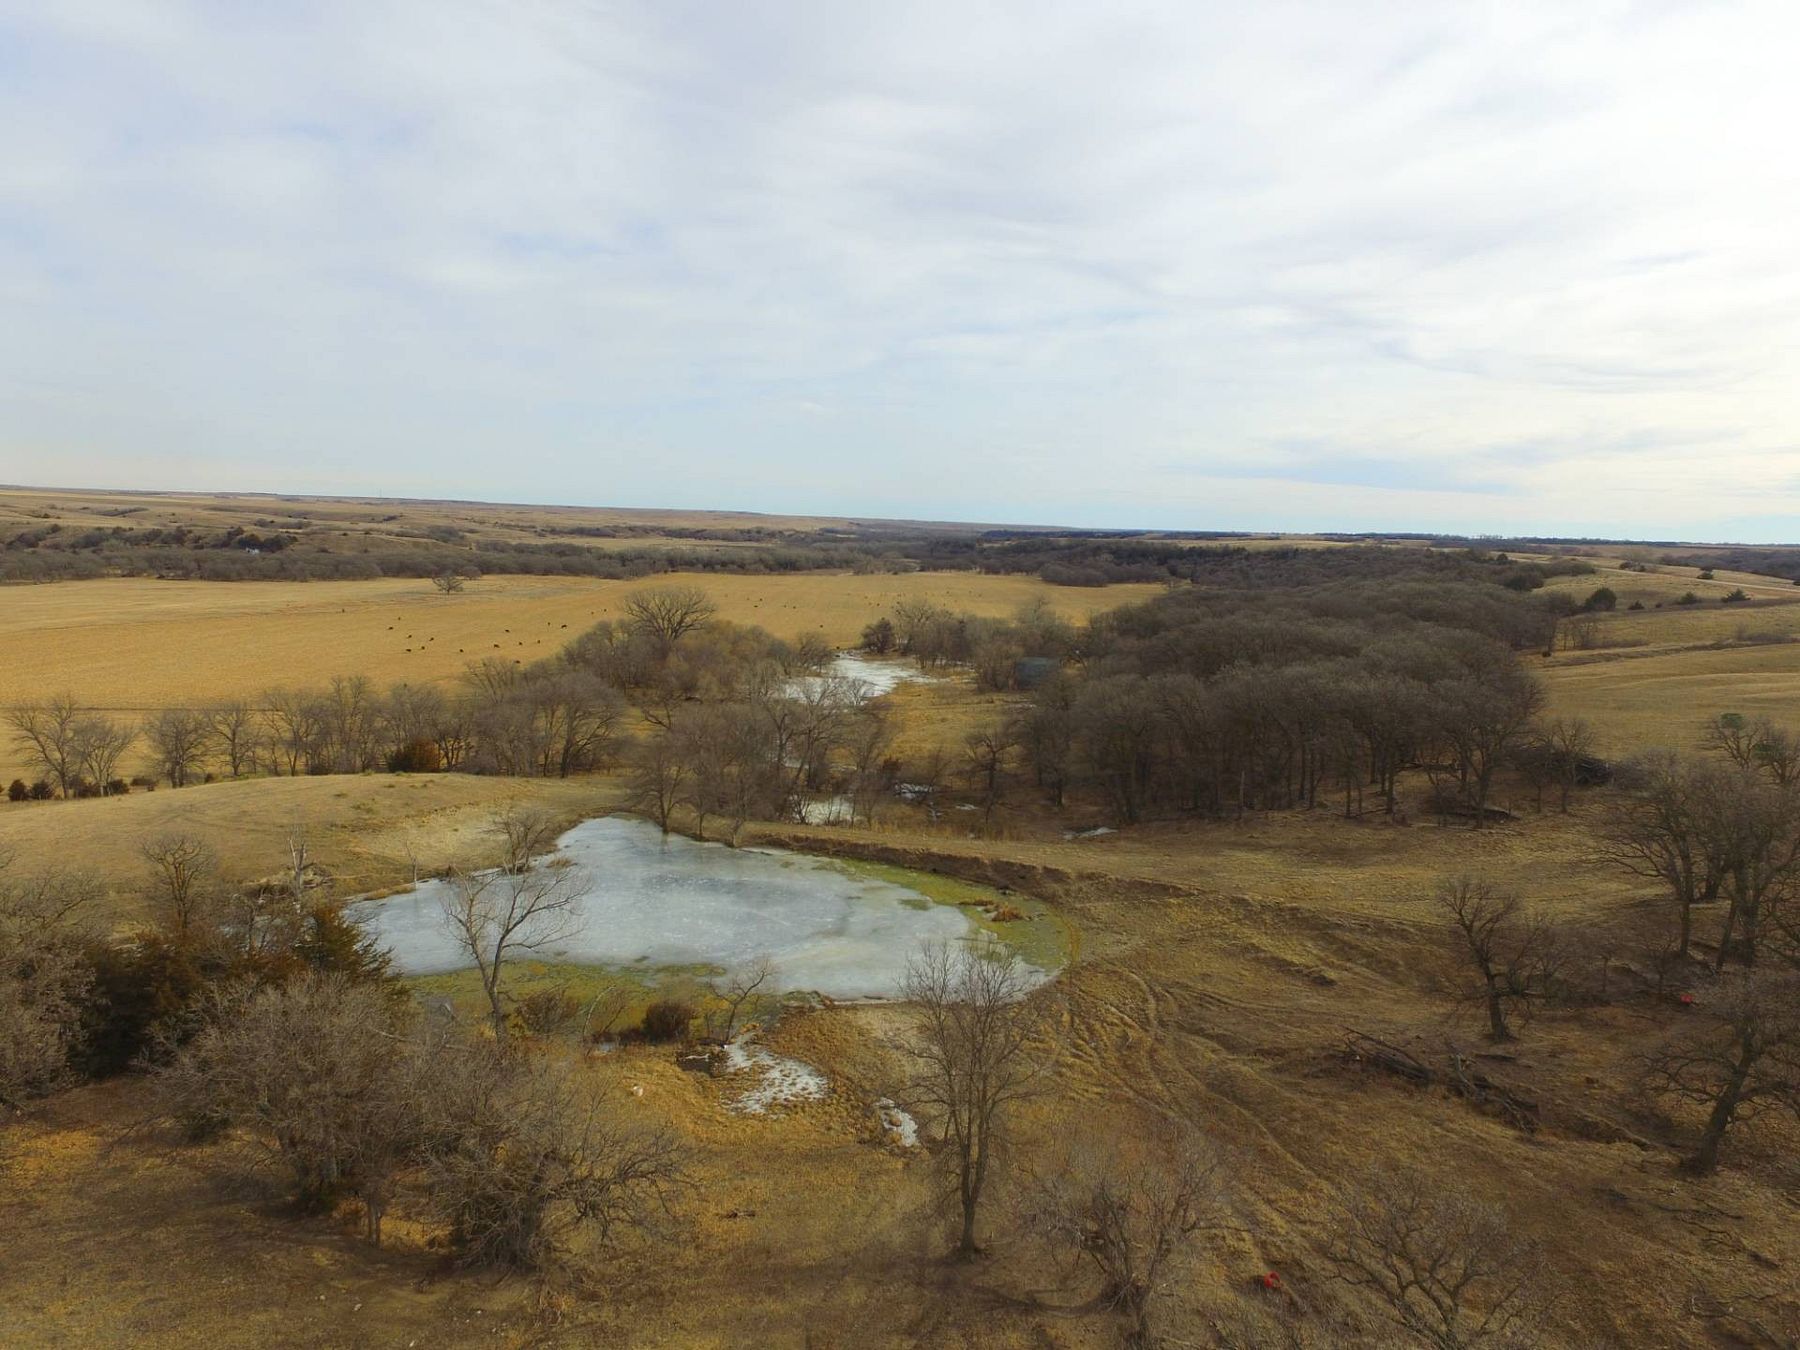 981 Acres of Agricultural Land for Auction in Mills, Nebraska, NE